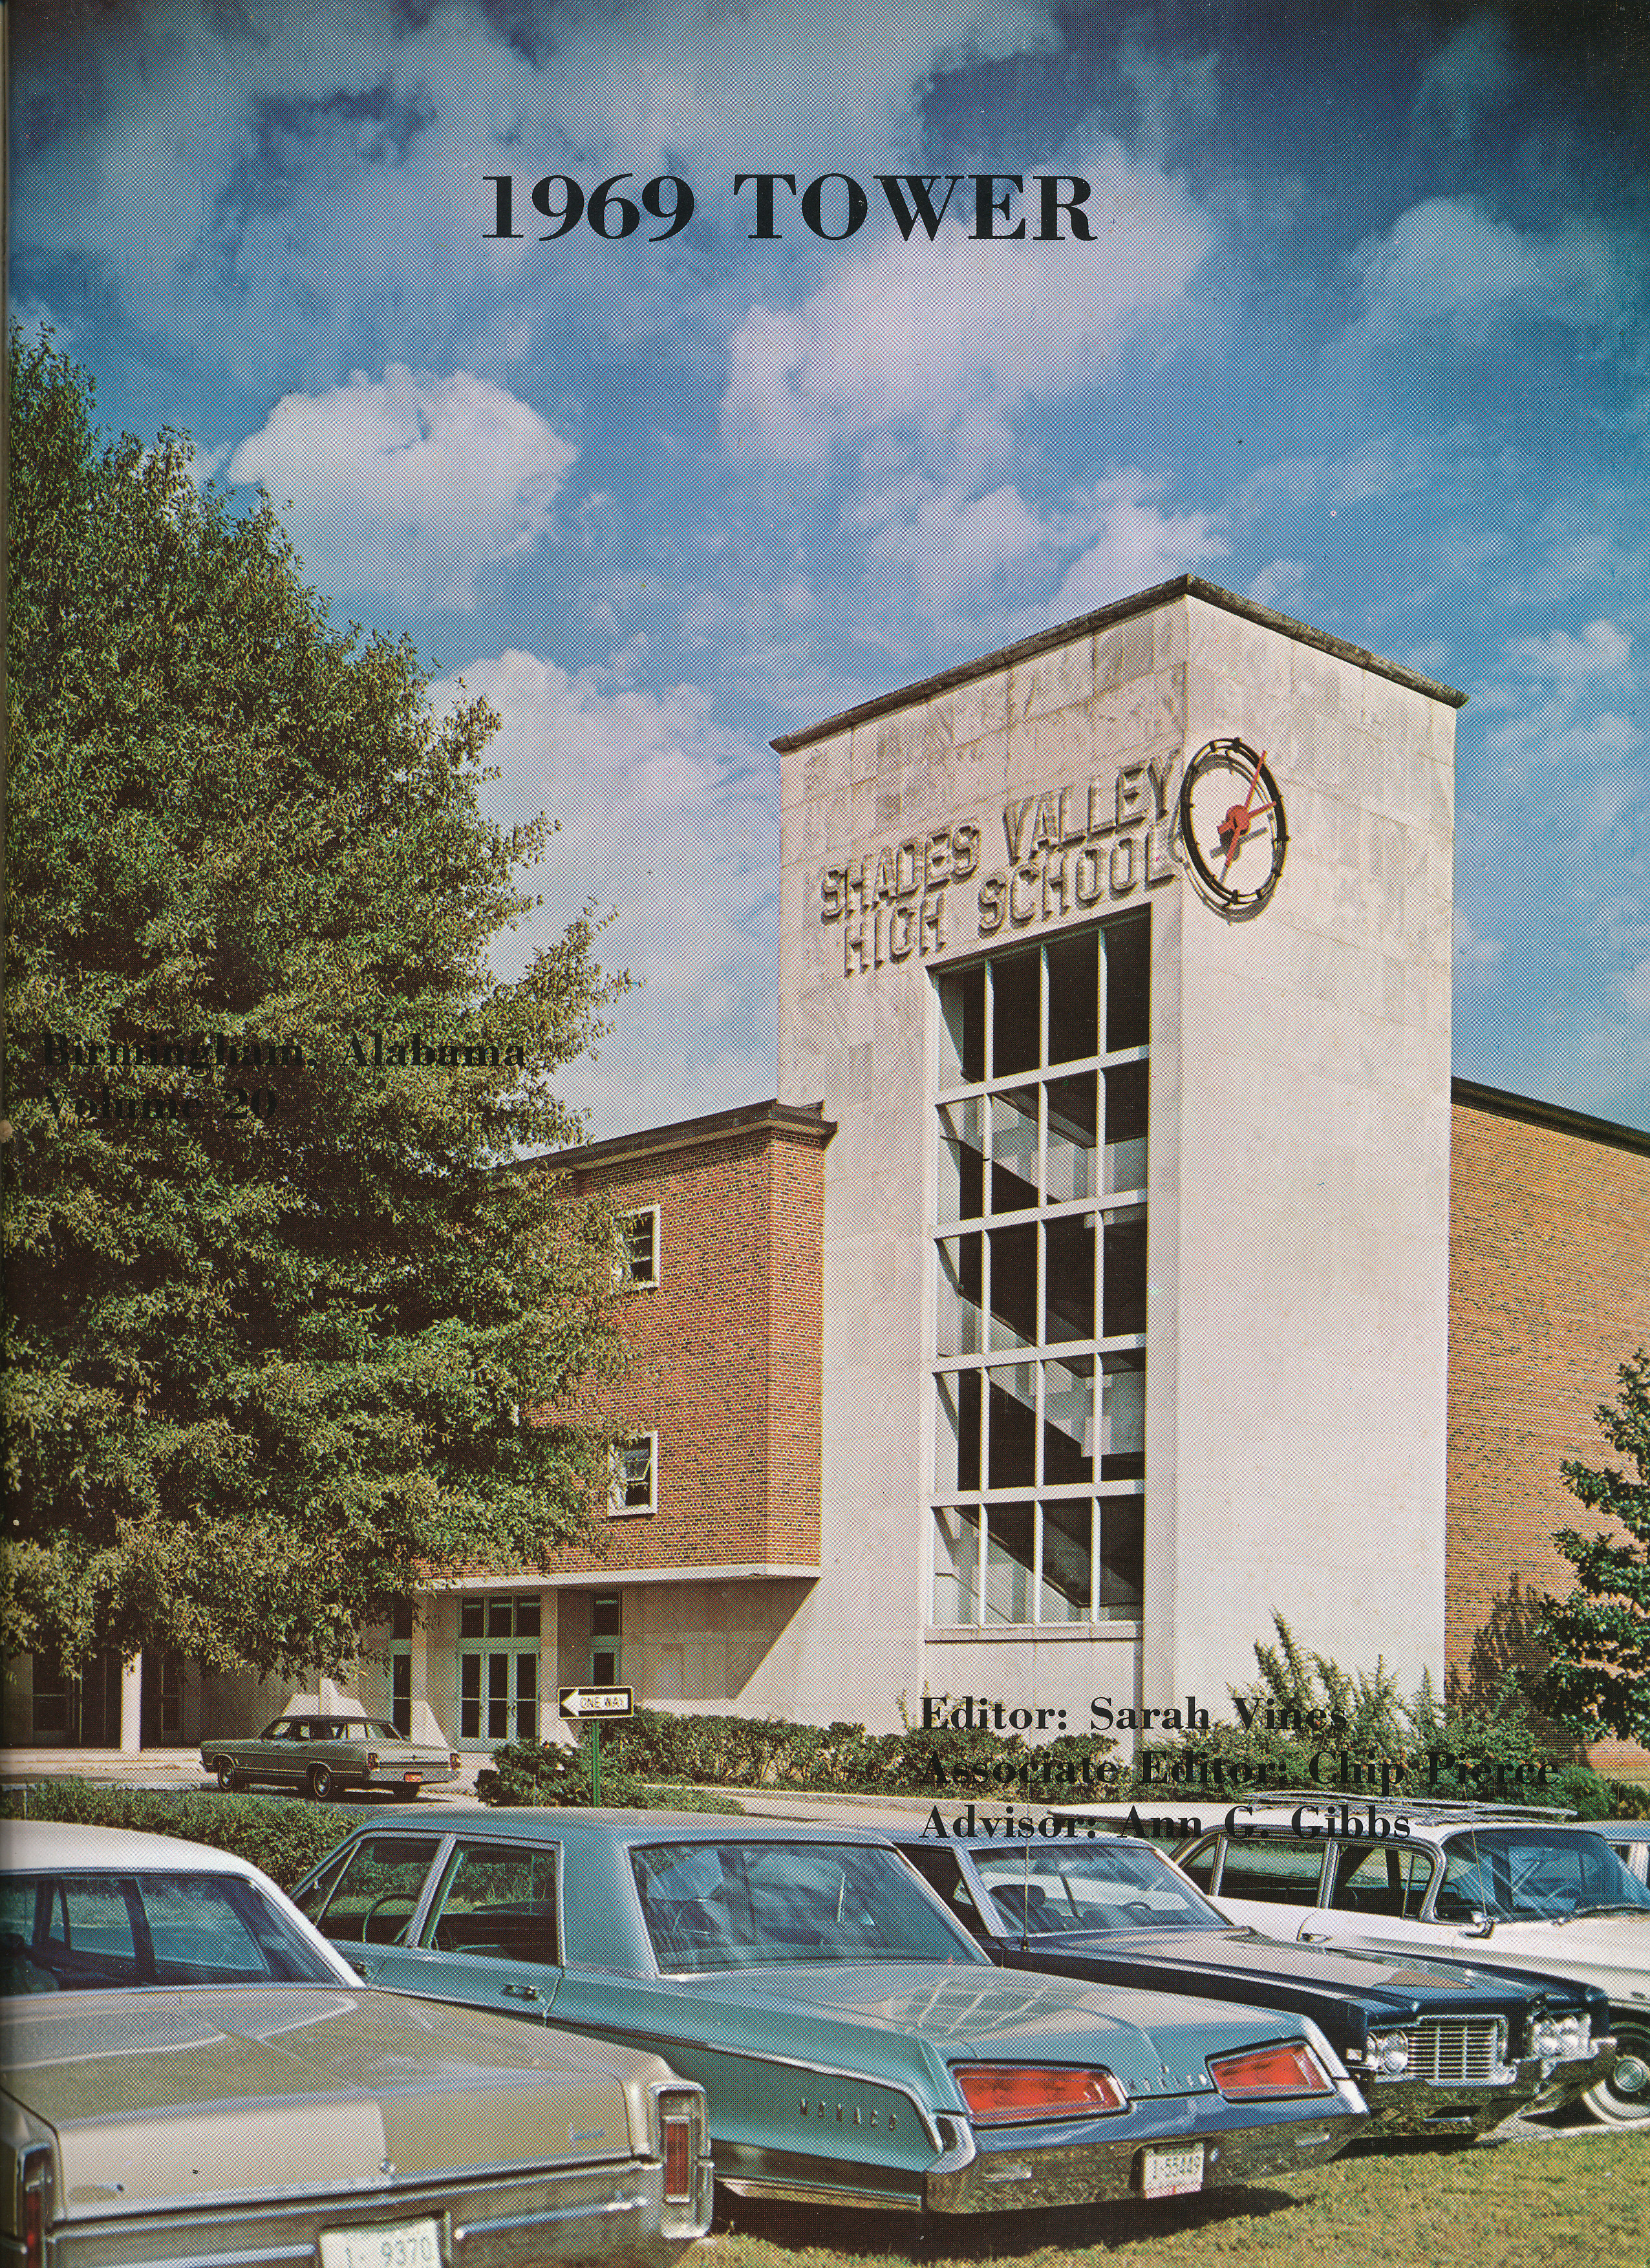 Shades Valley High School Tower-1969